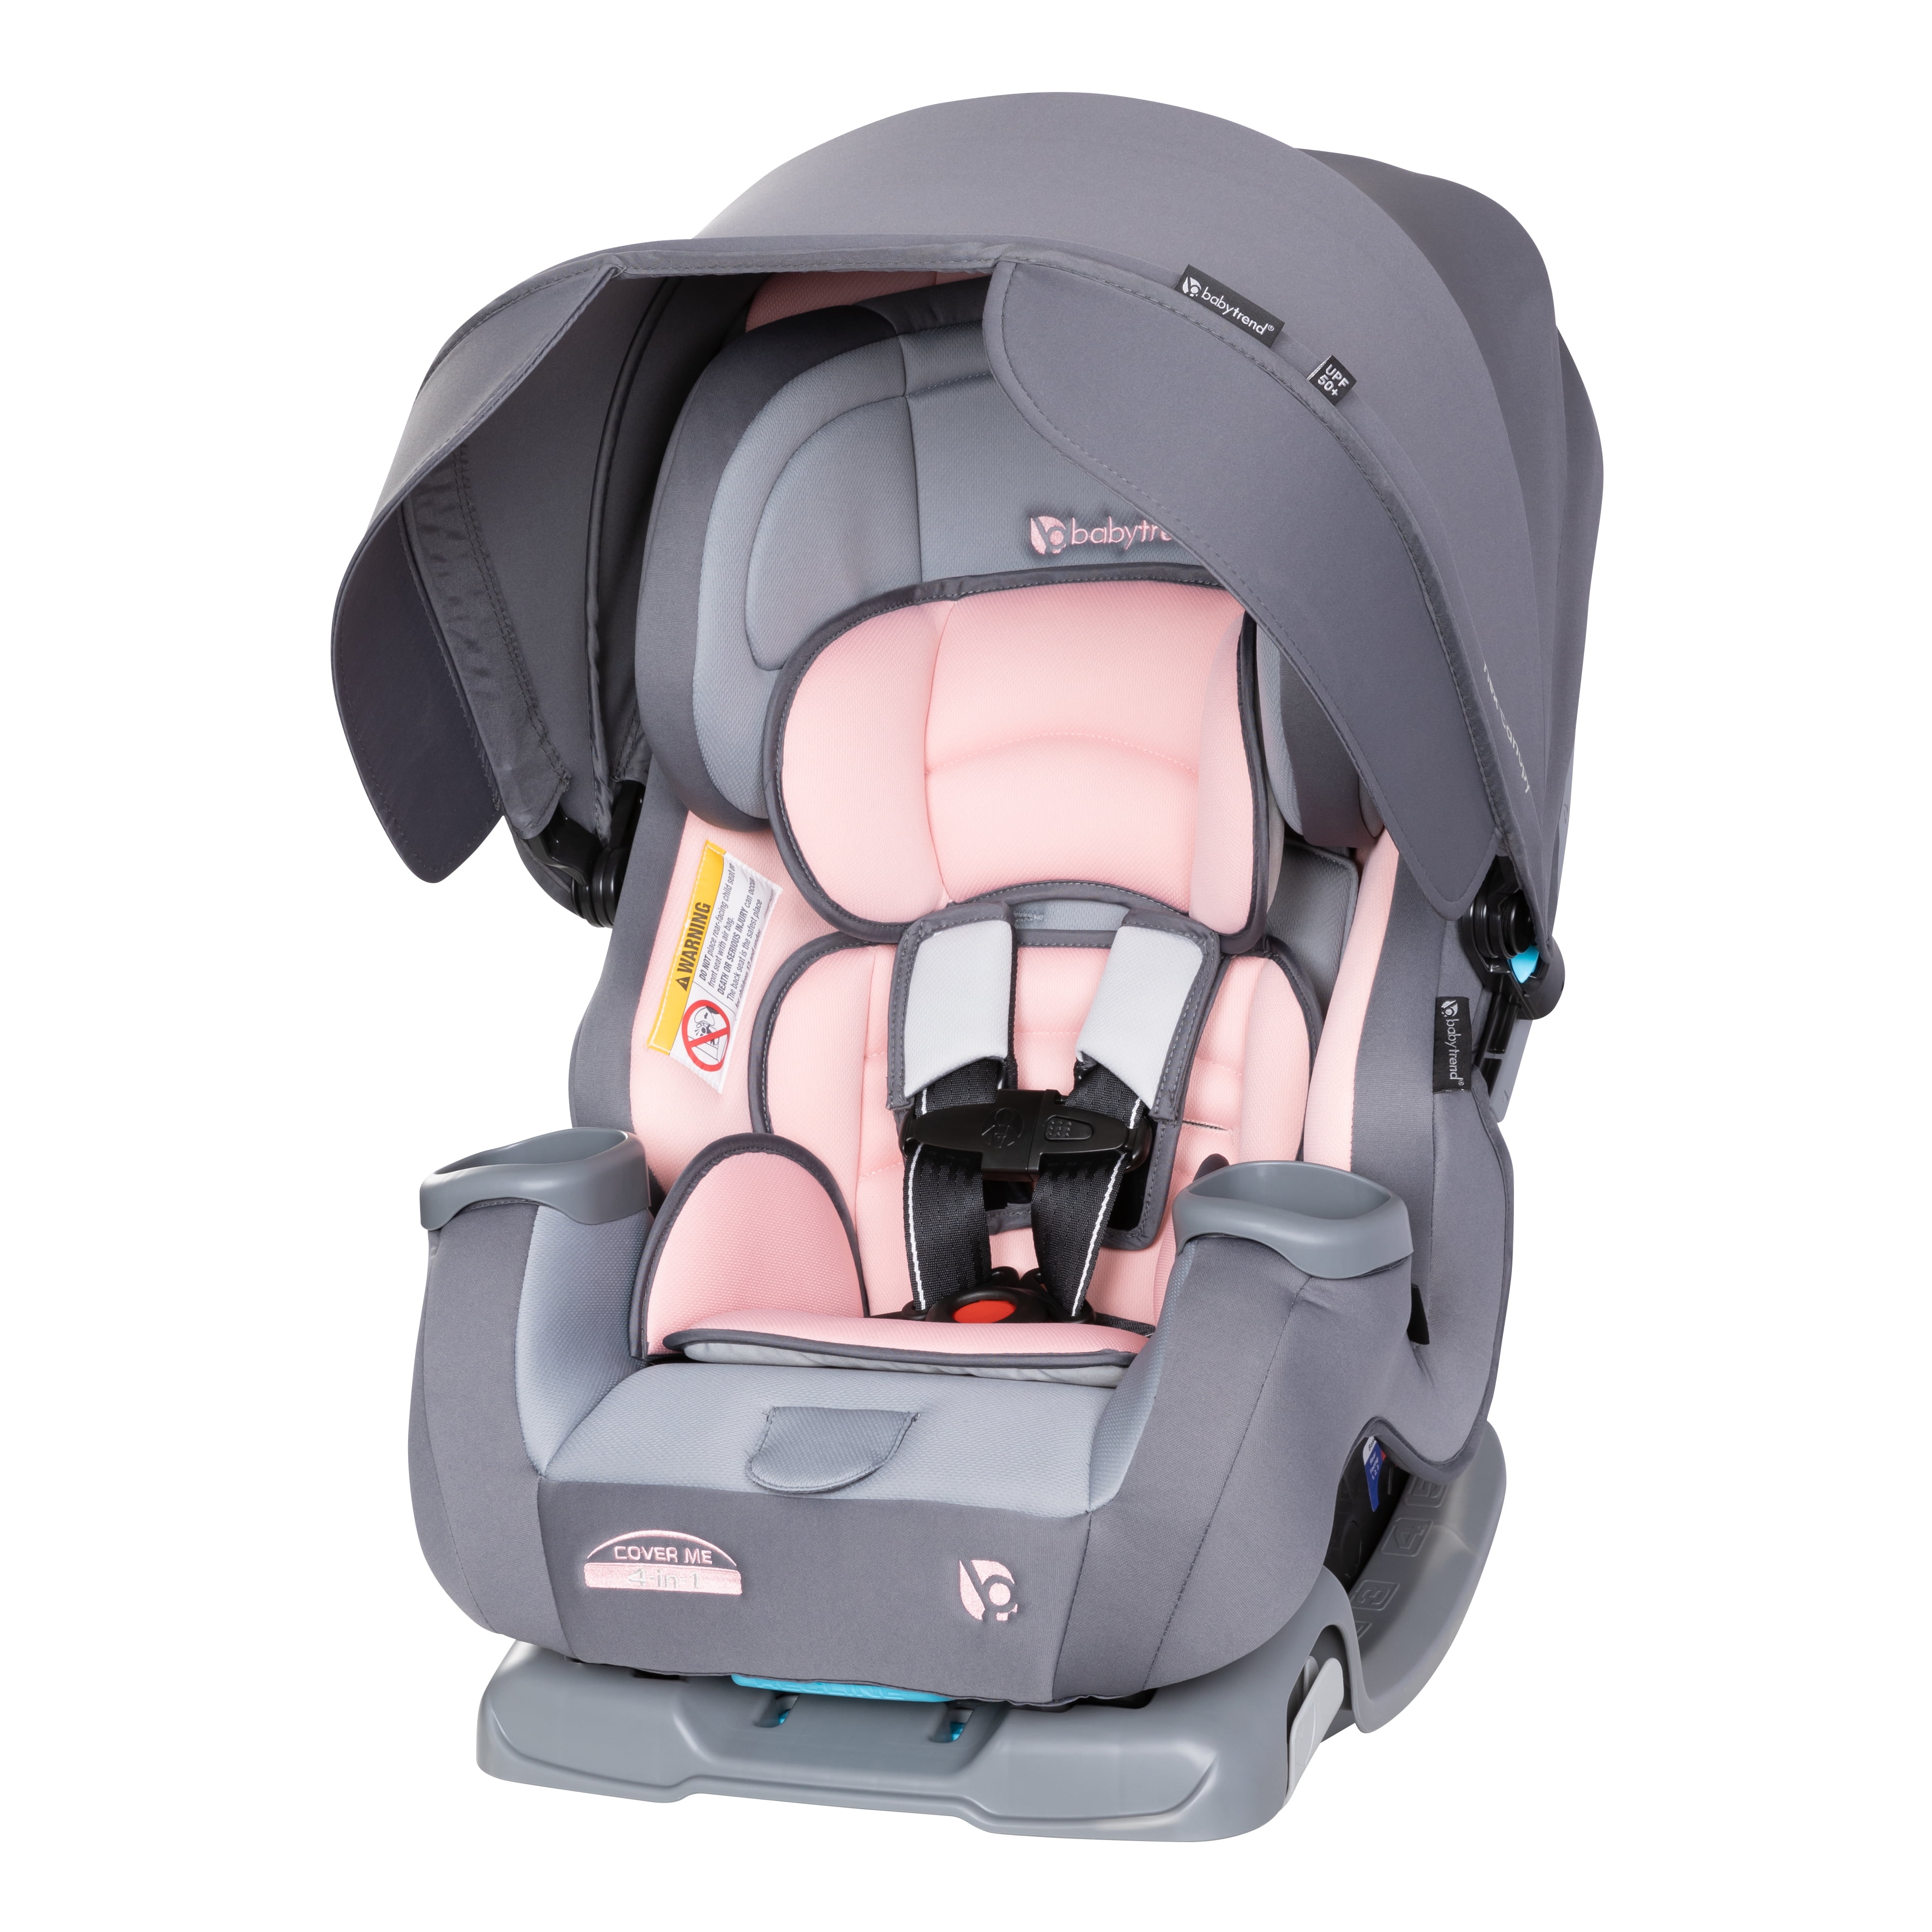 Babies Car Seat Coat